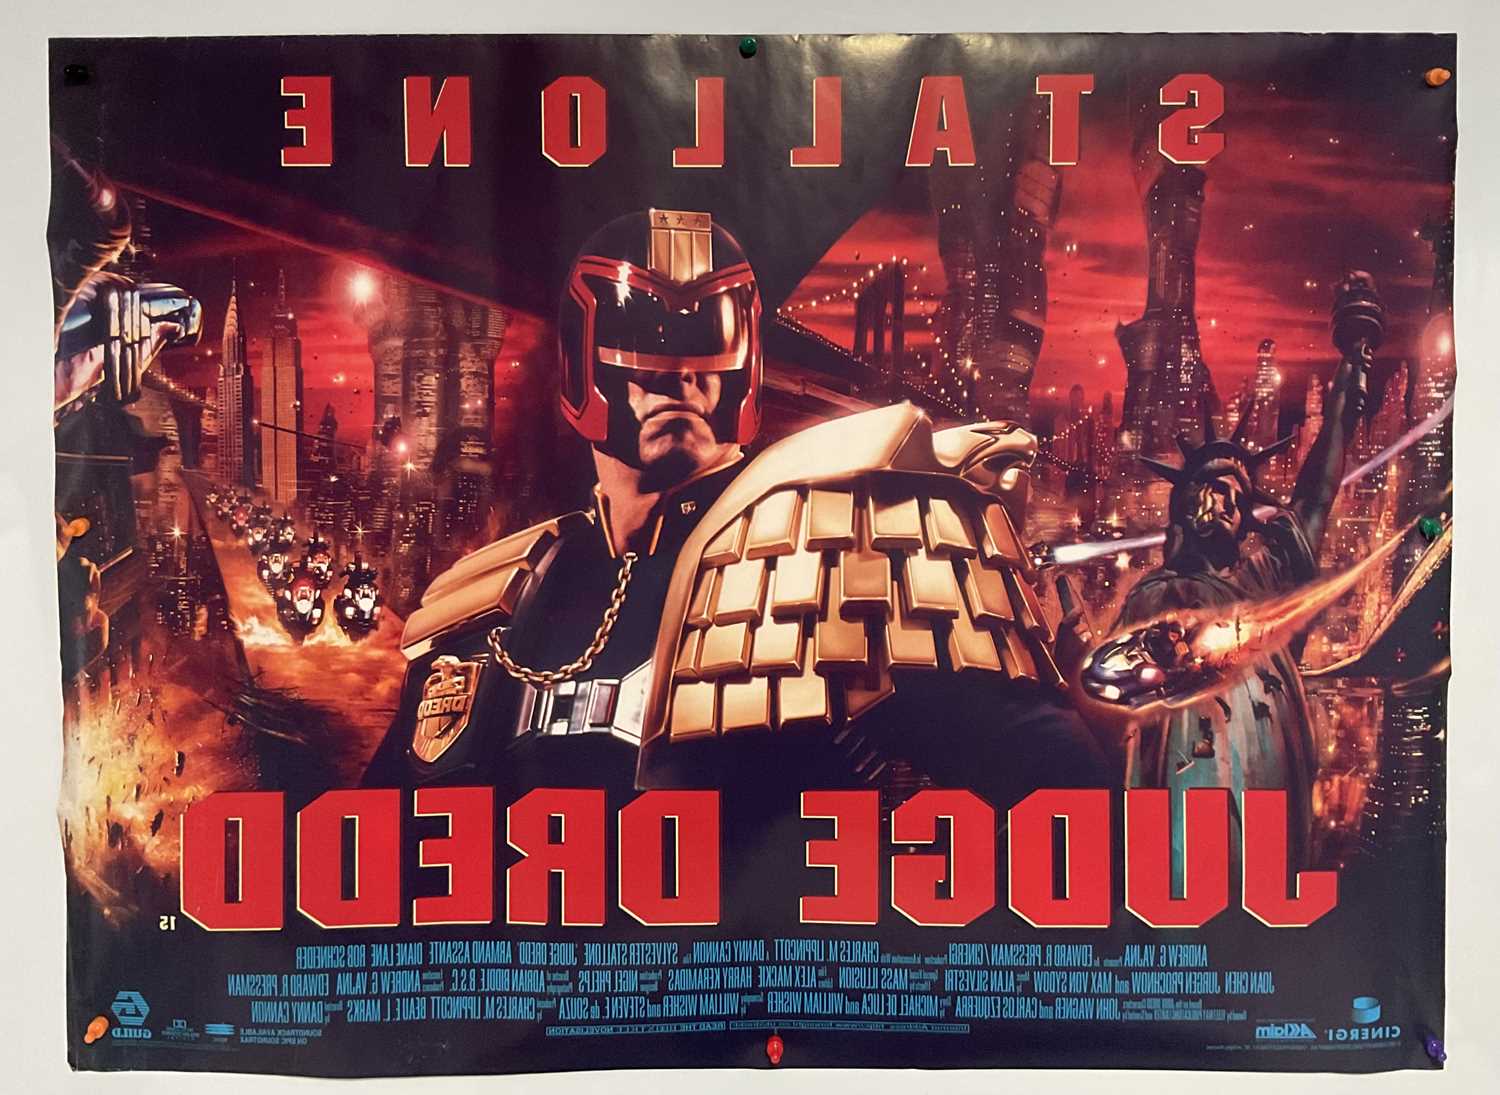 JUDGE DREDD (1995) UK Quad film poster, comic book adaptation starring Sylvester Stallone, artwork - Image 6 of 6